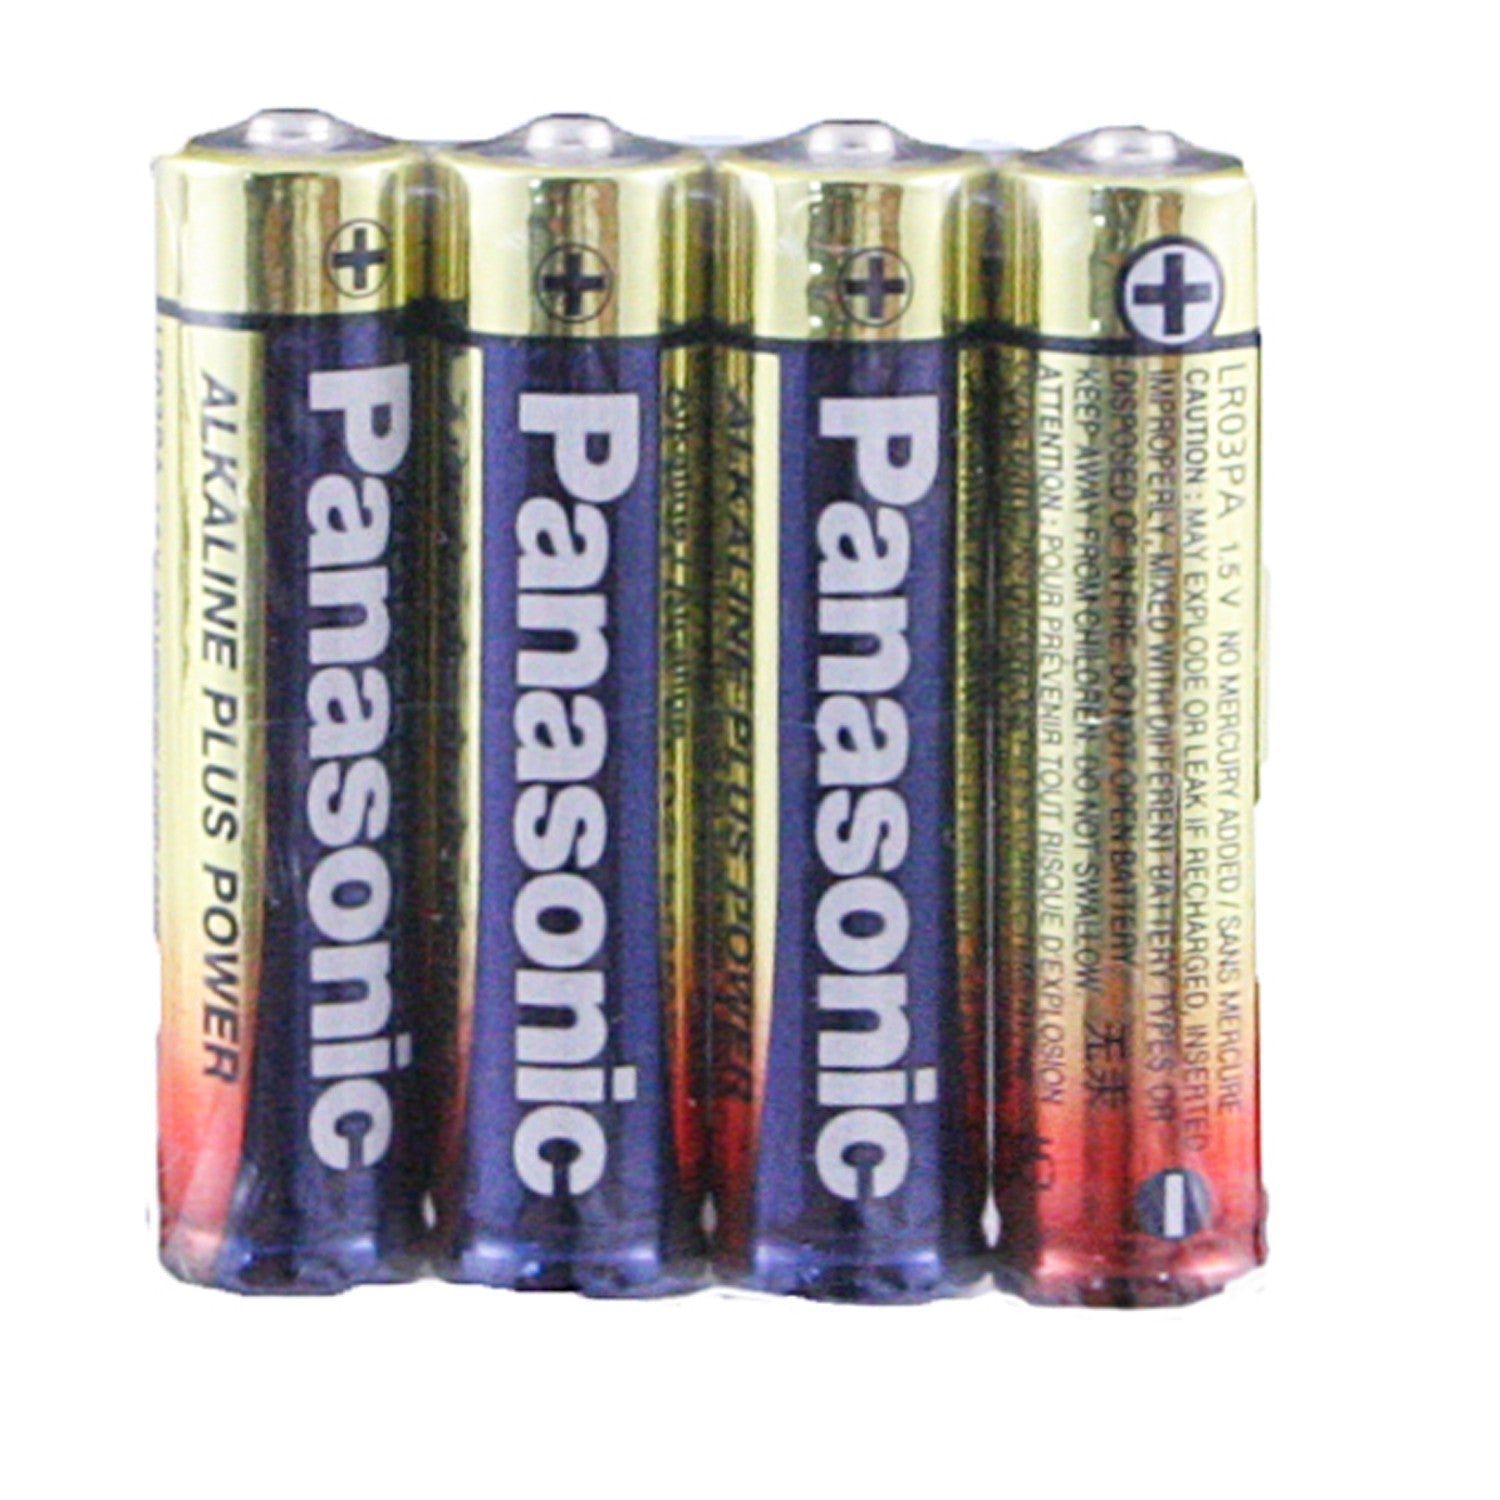 Panasonic Alkaline Batteries